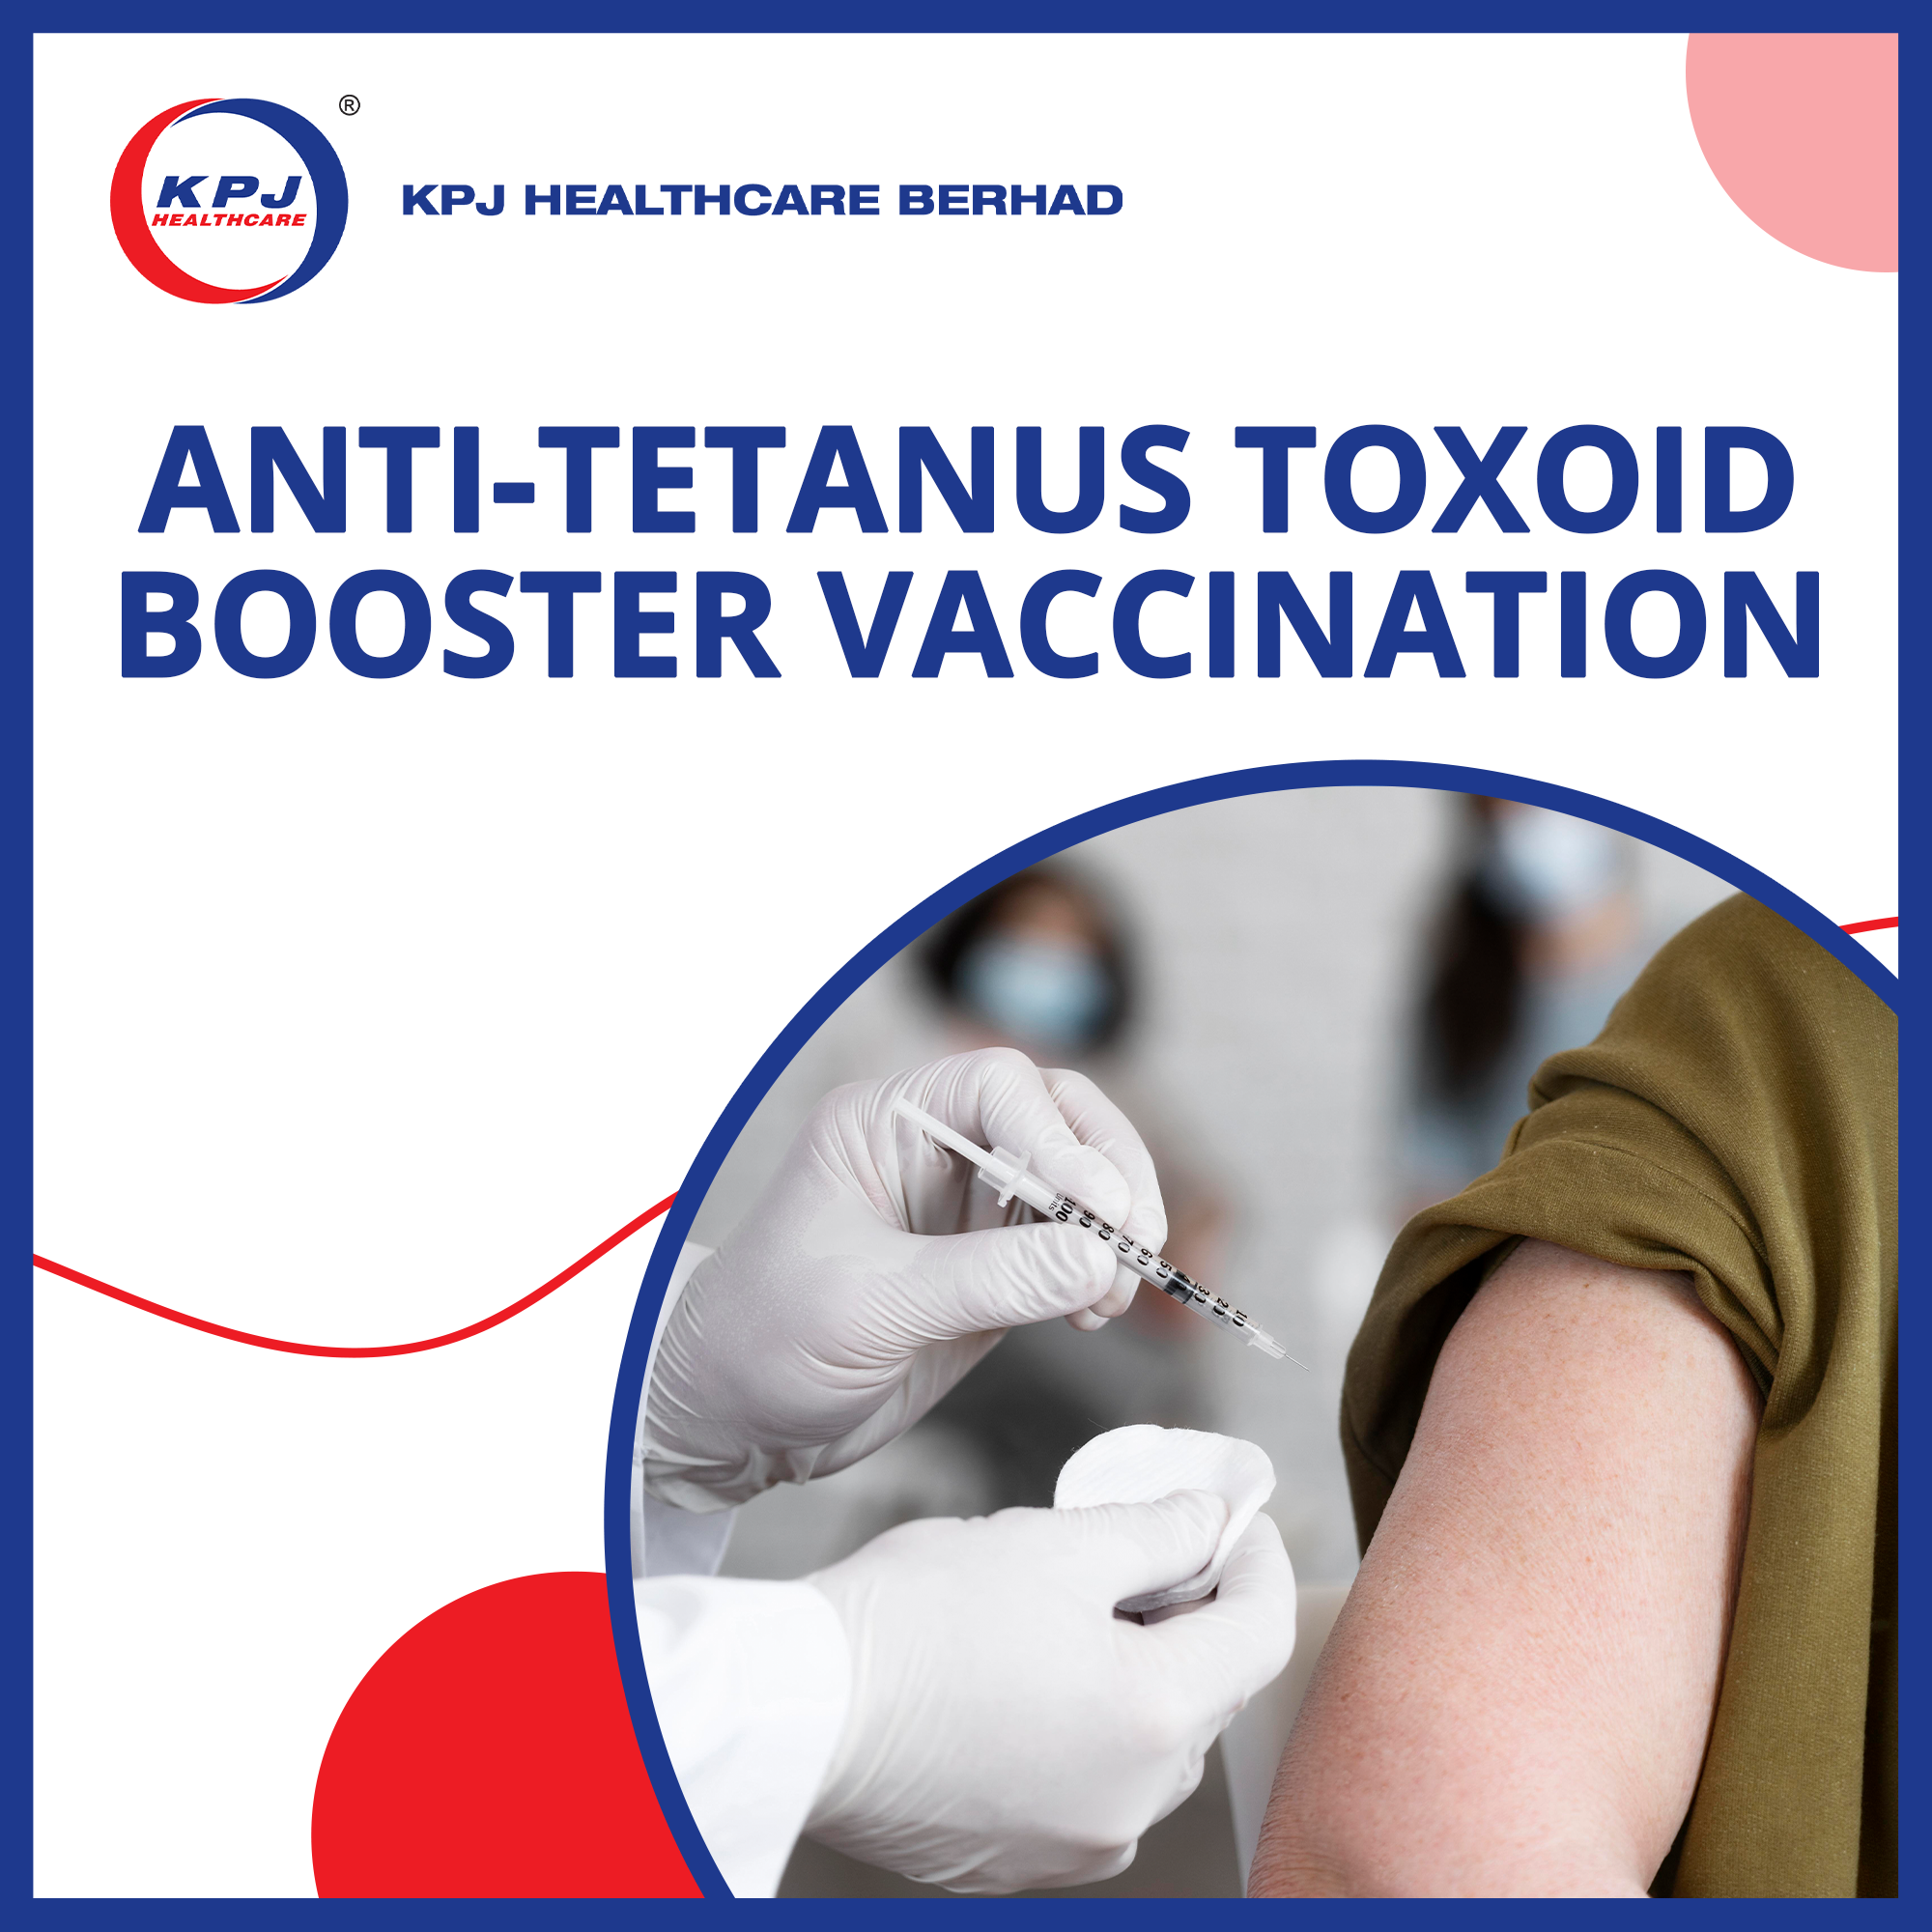 KPJ ACC Kinrara - Anti-Tetanus Toxoid Booster Vaccination - 1 pax - DoctorOnCall Online Pharmacy